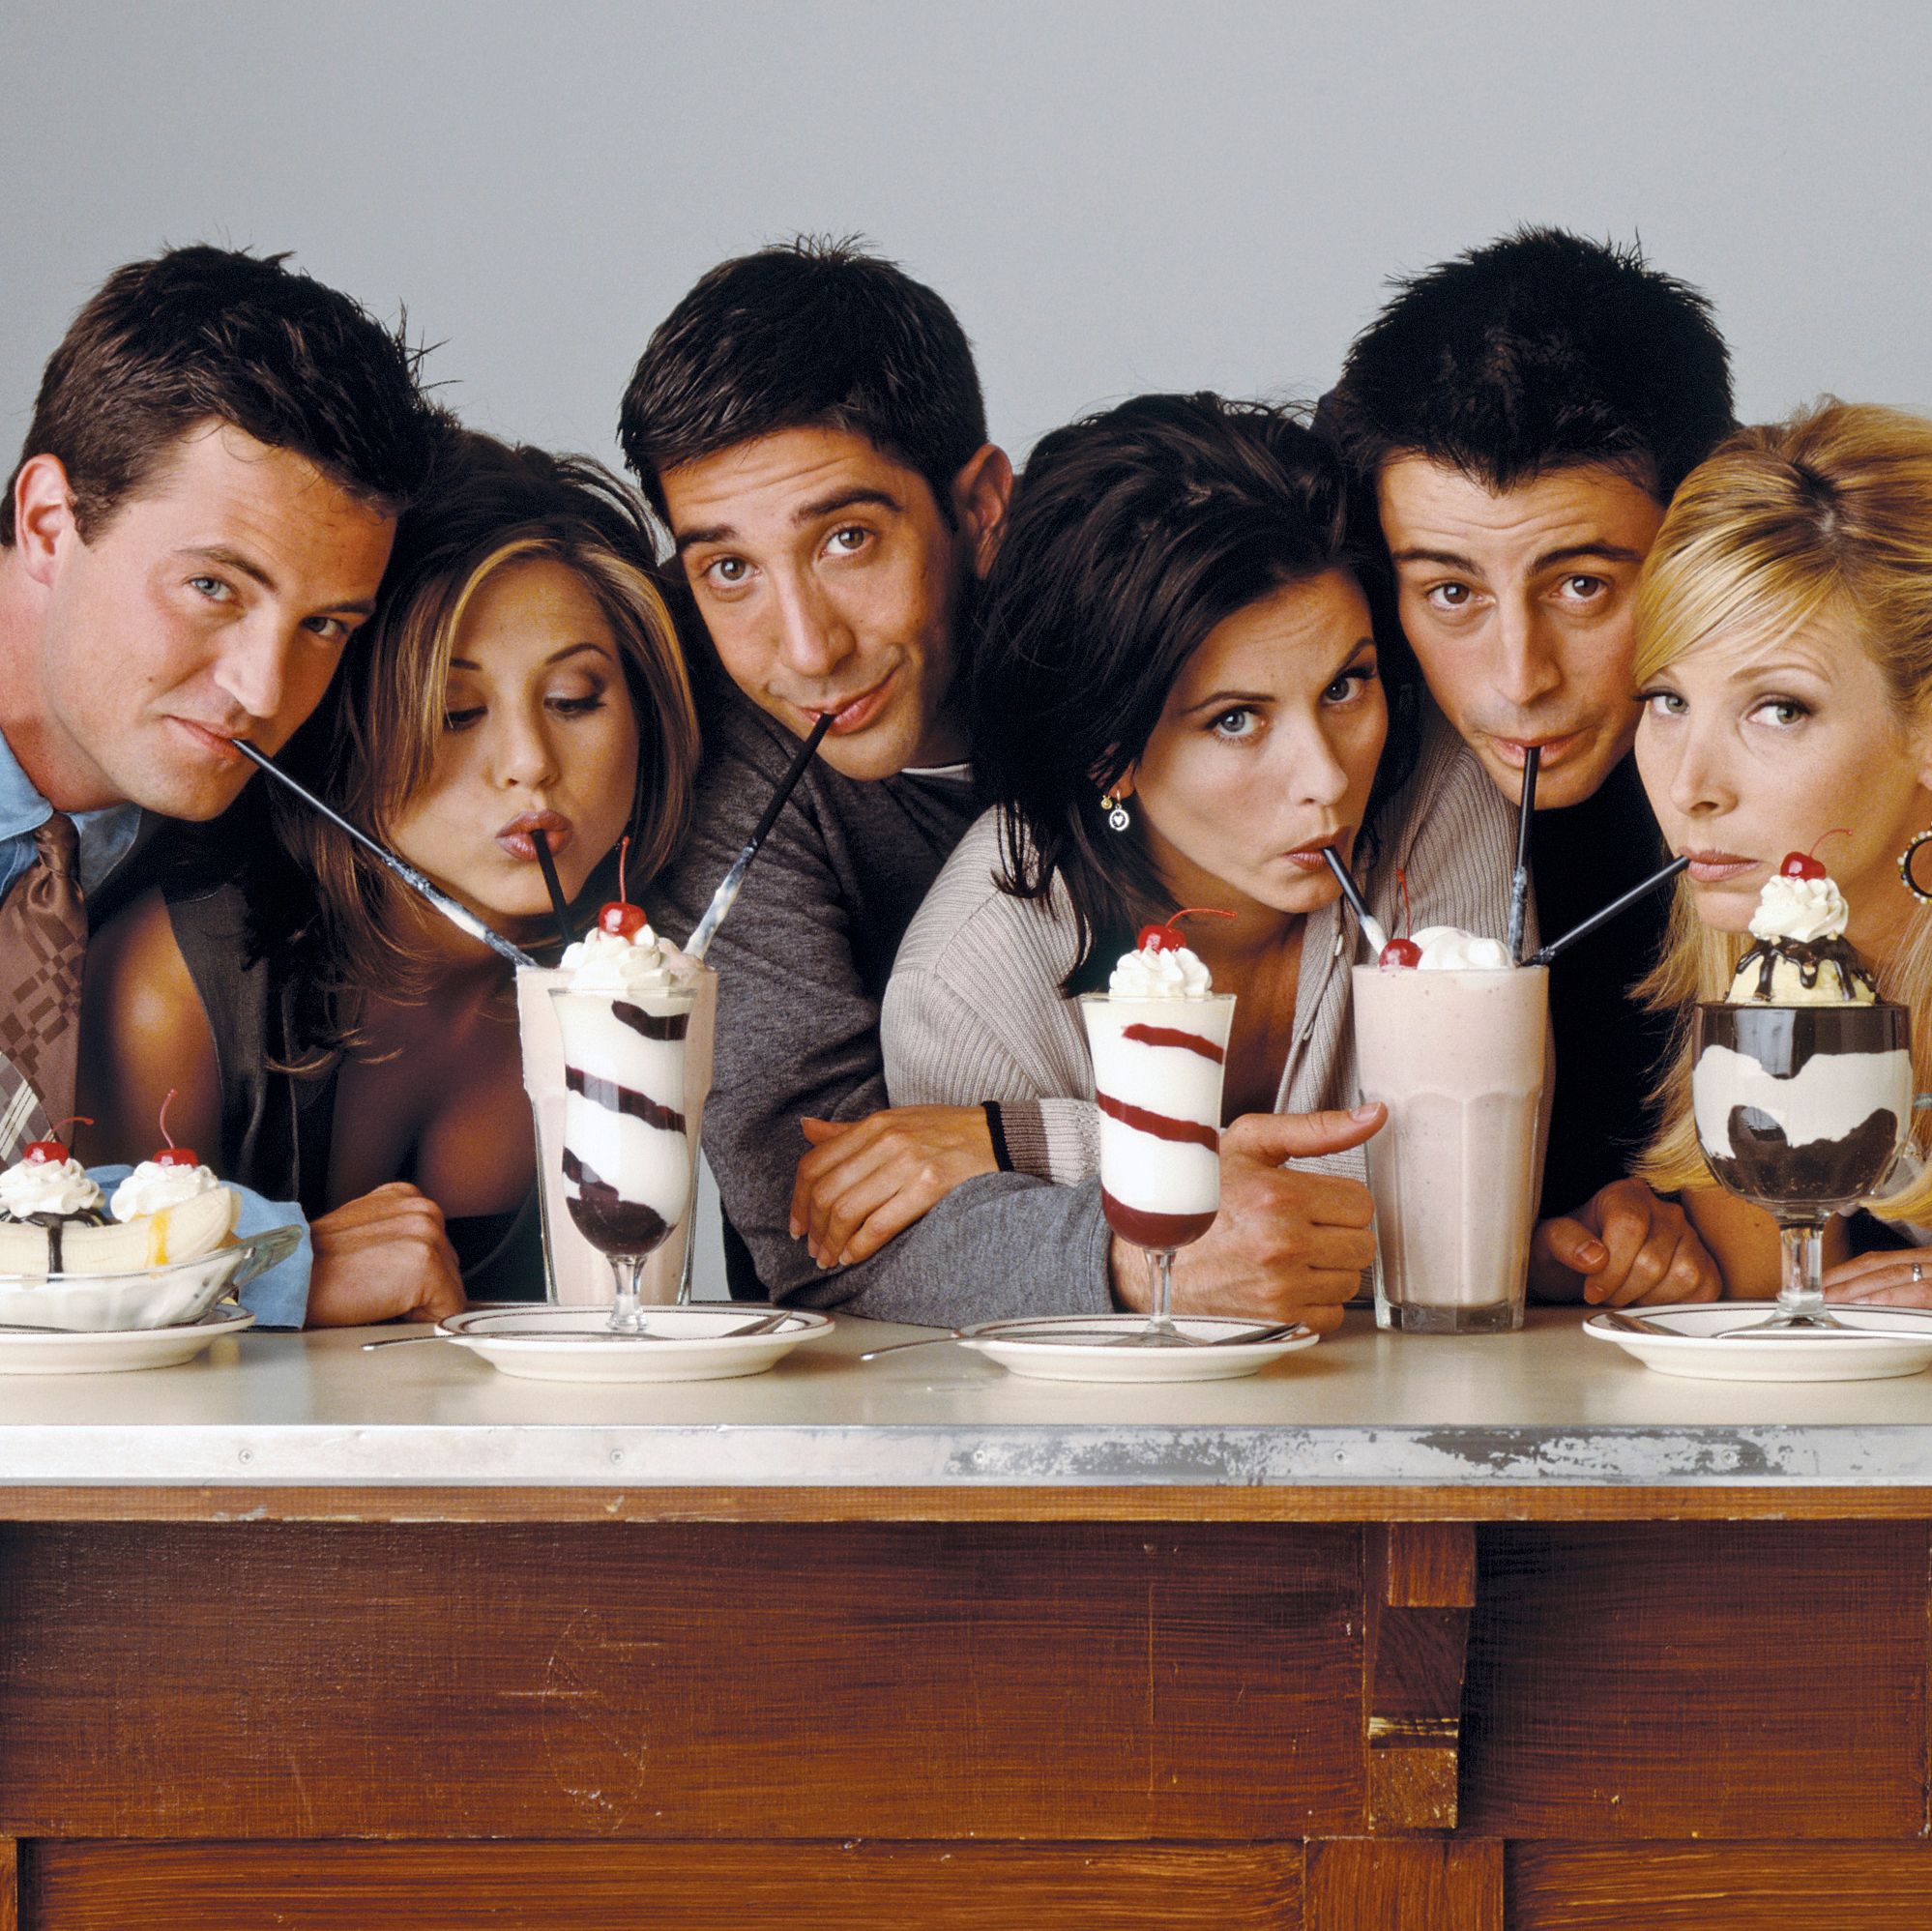  Friends: The Complete Series (25th Anniversary DVD) : Courteney  Cox, David Schwimmer, Jennifer Aniston, Lisa Kudrow, Matthew Perry, Matt  LeBlanc: Movies & TV